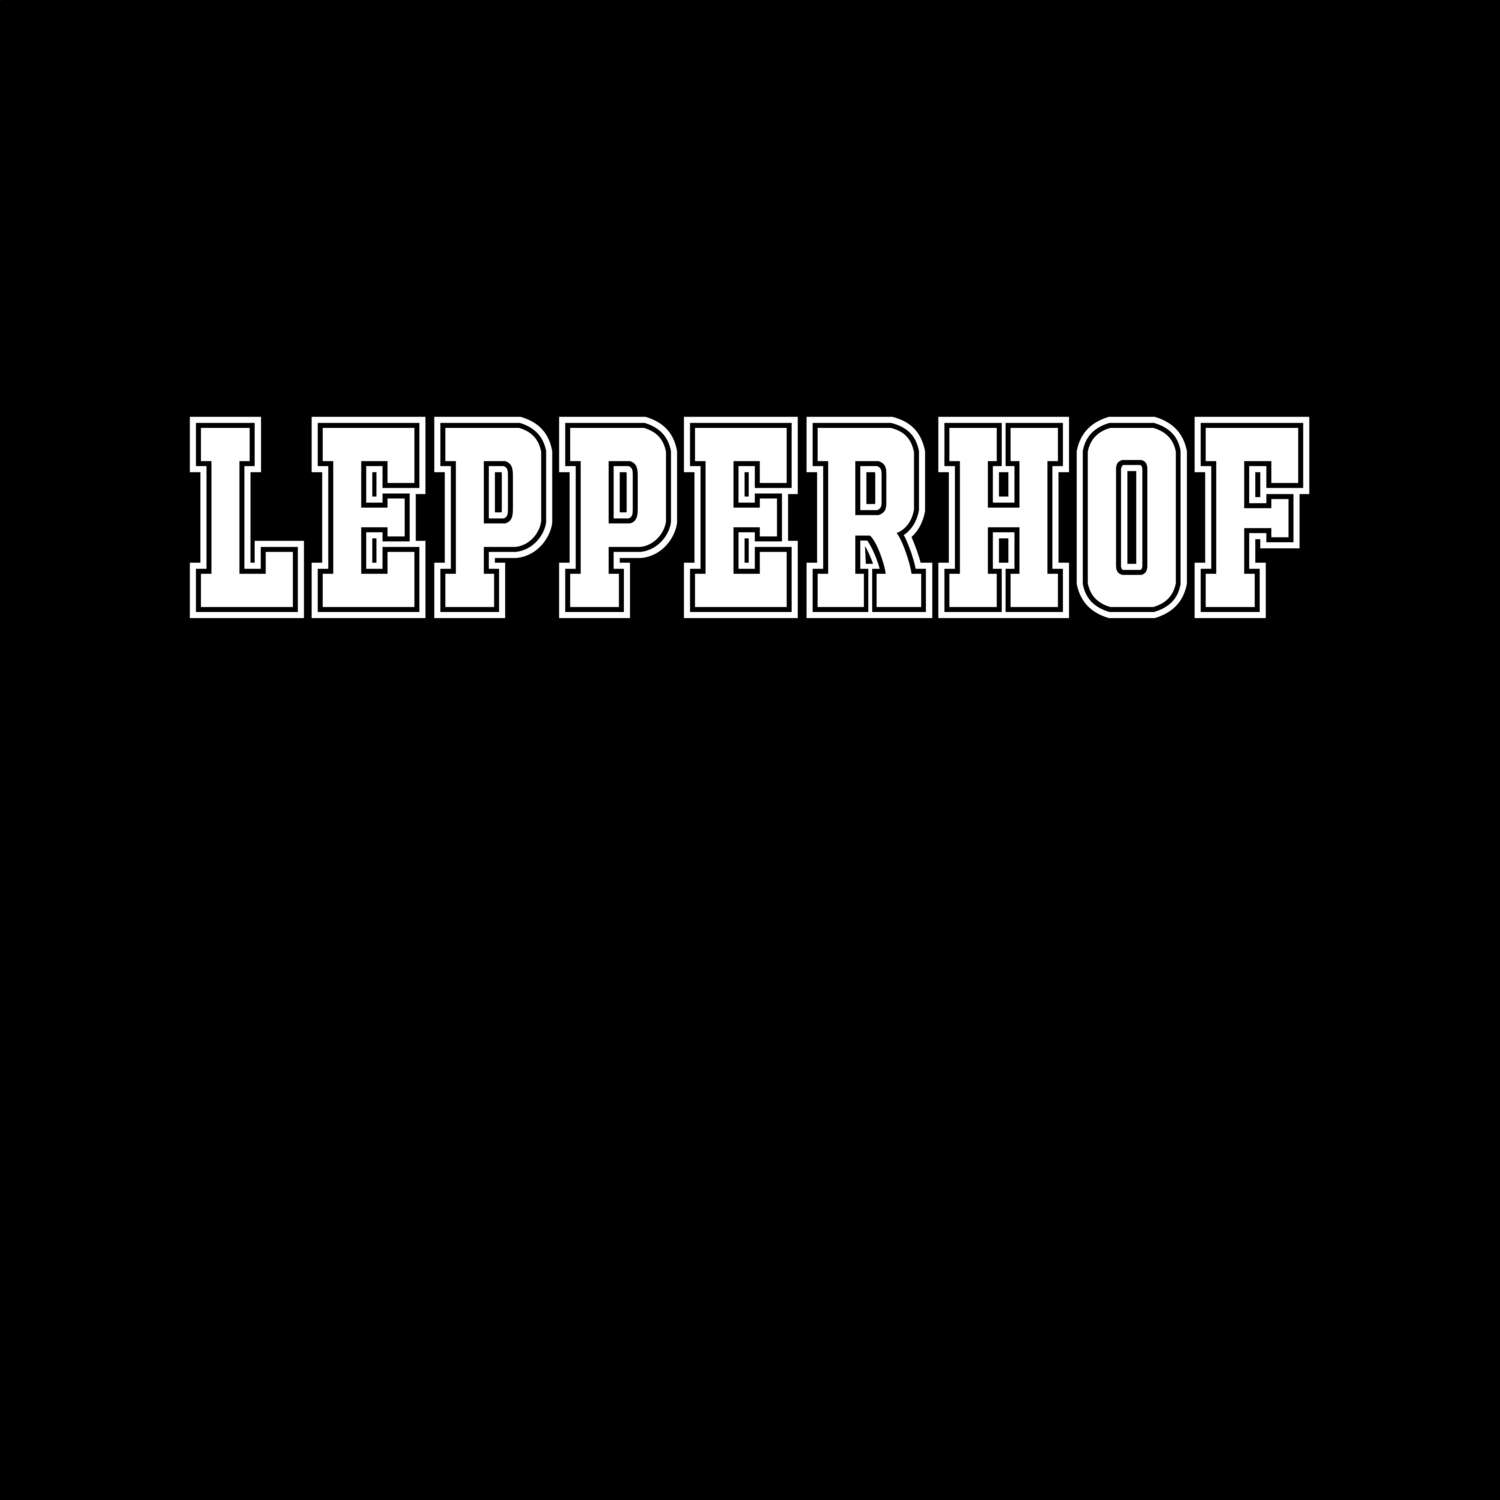 Lepperhof T-Shirt »Classic«